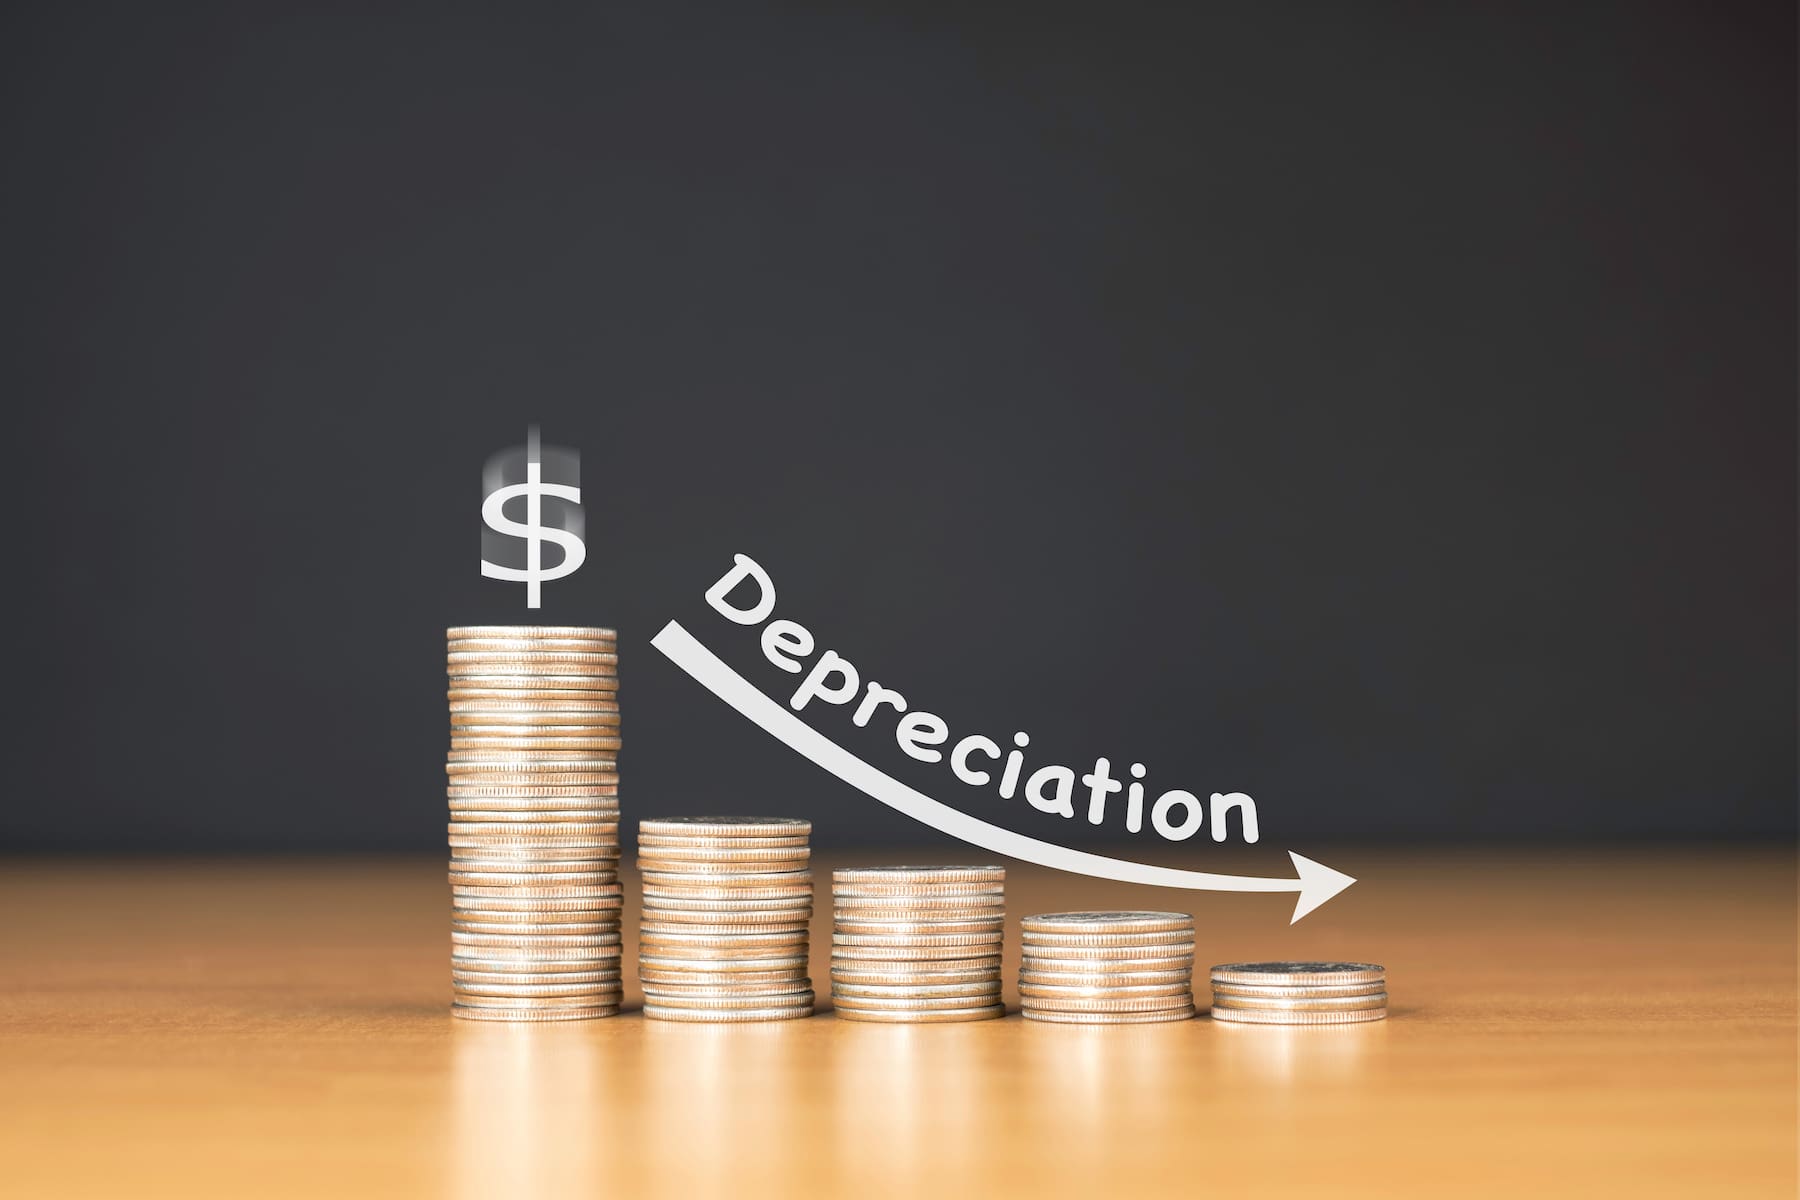 Depreciation visual using coins